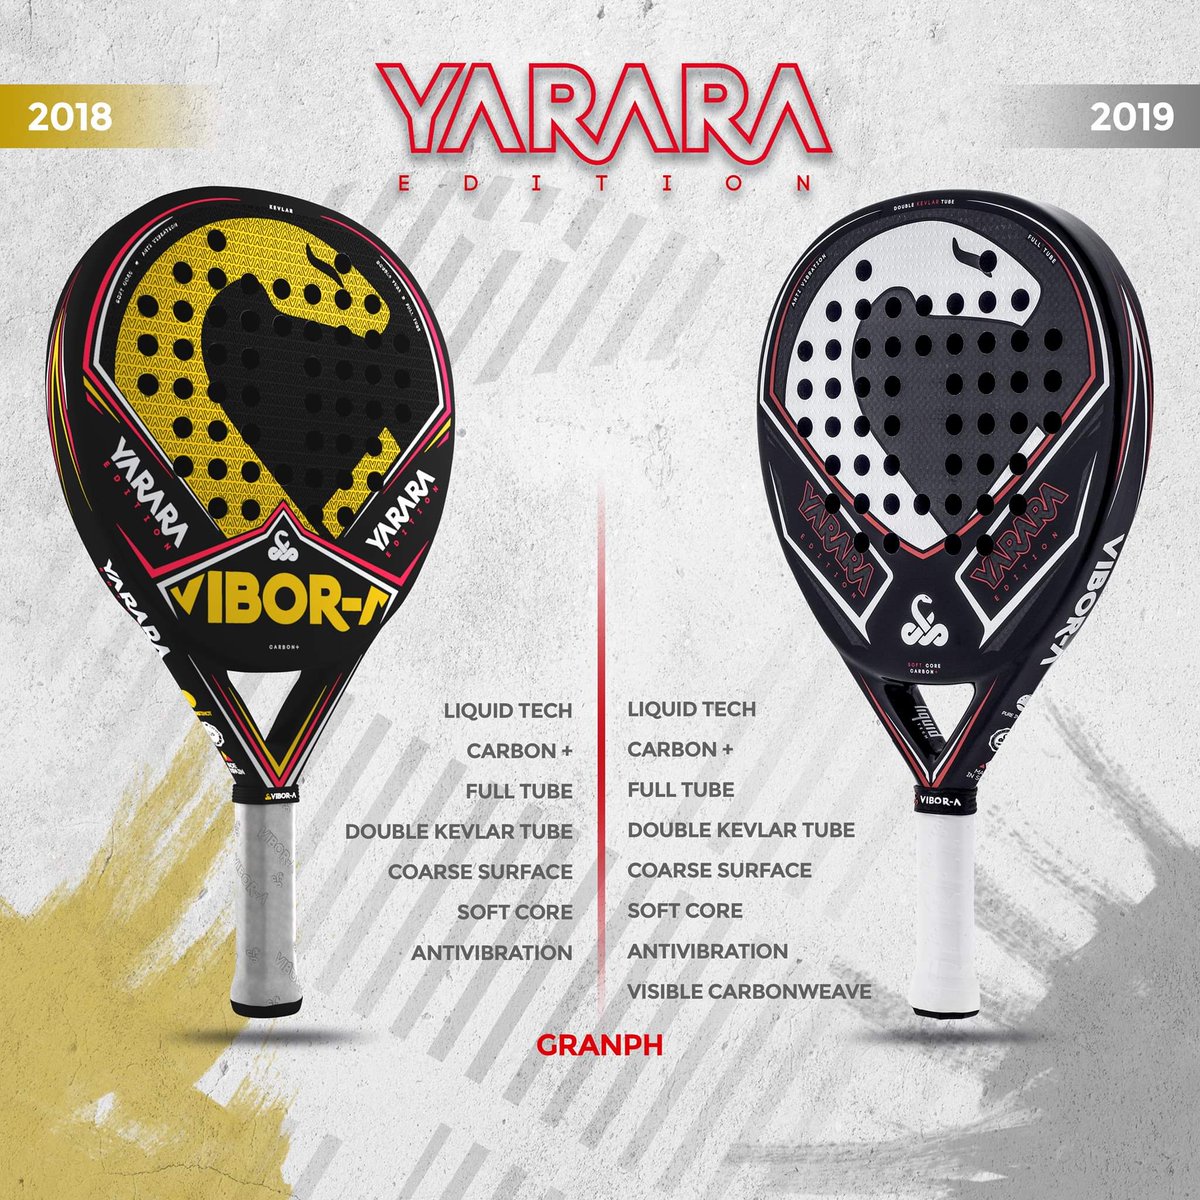 Review Yarara Edition 2019 | Time2Padel